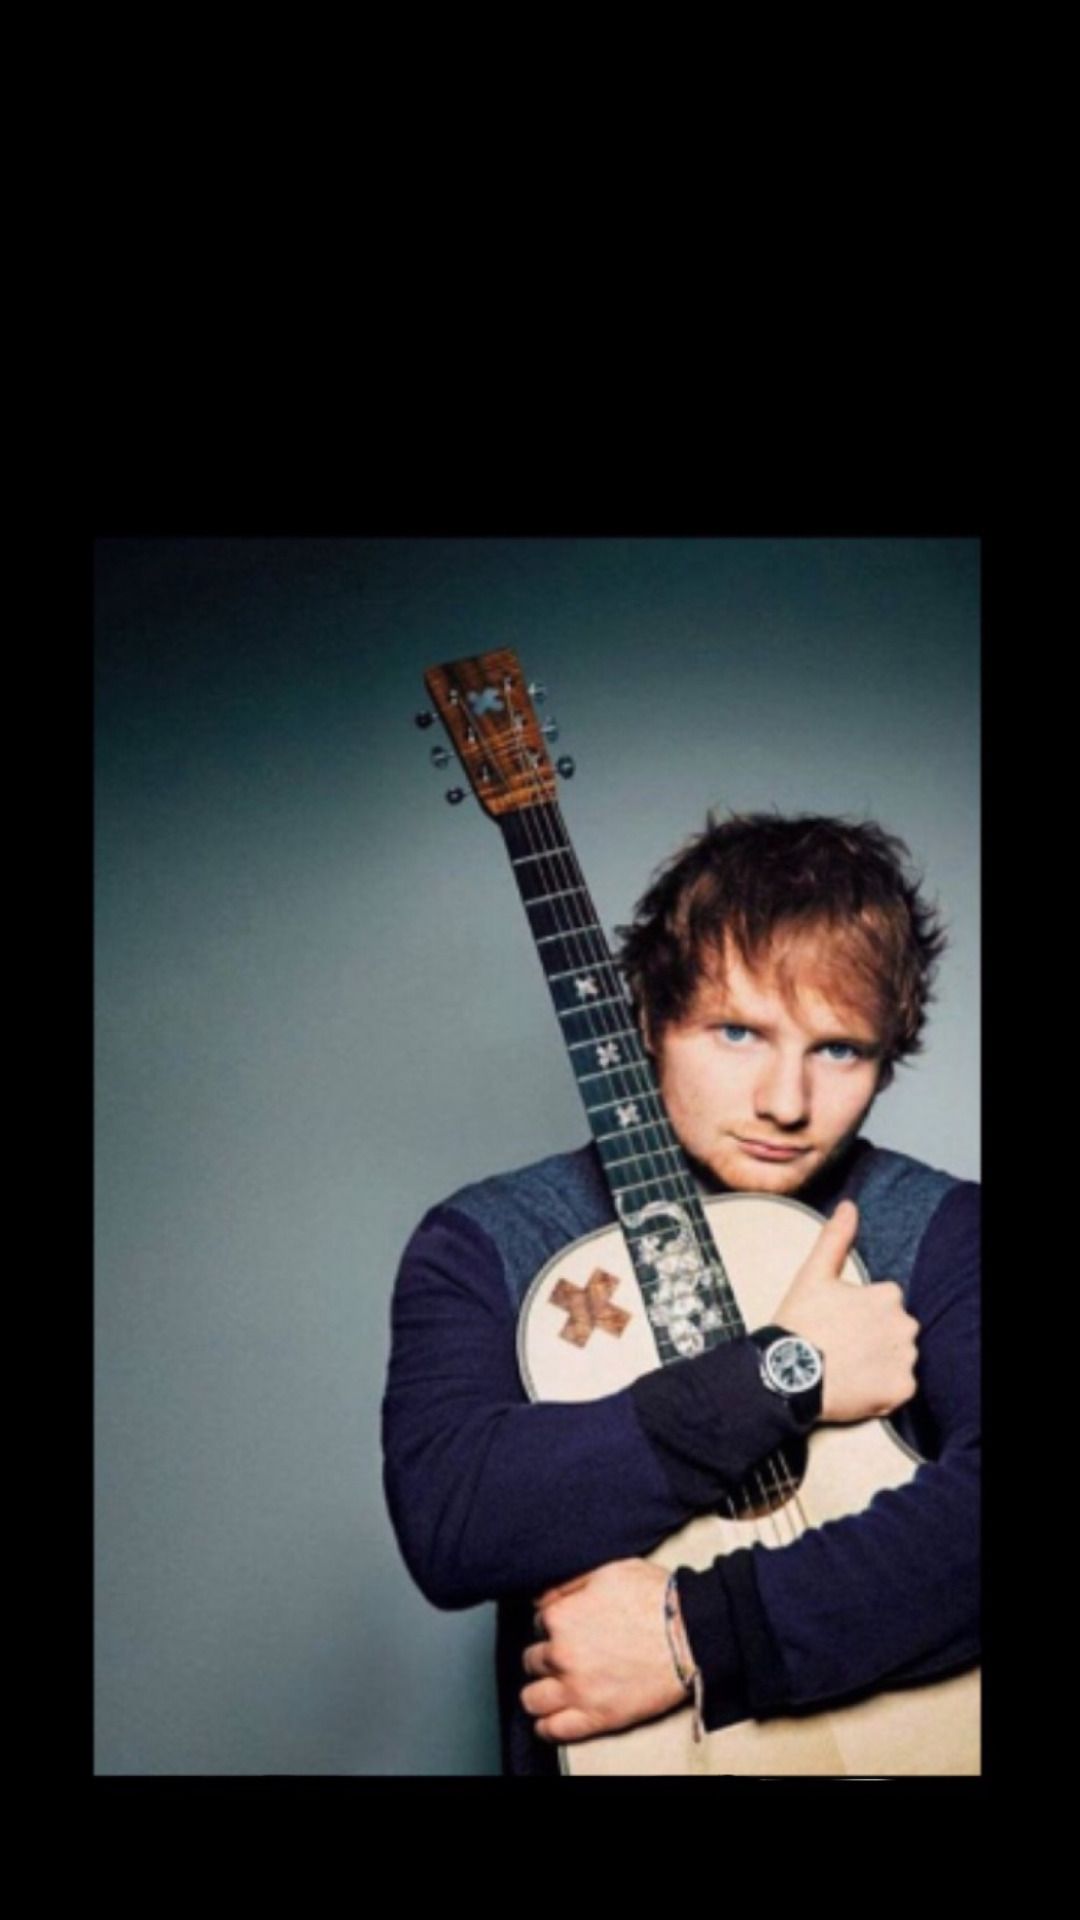 Ed Sheeran Wallpapers Ed Sheeran lock screen for my iPhone. Fits